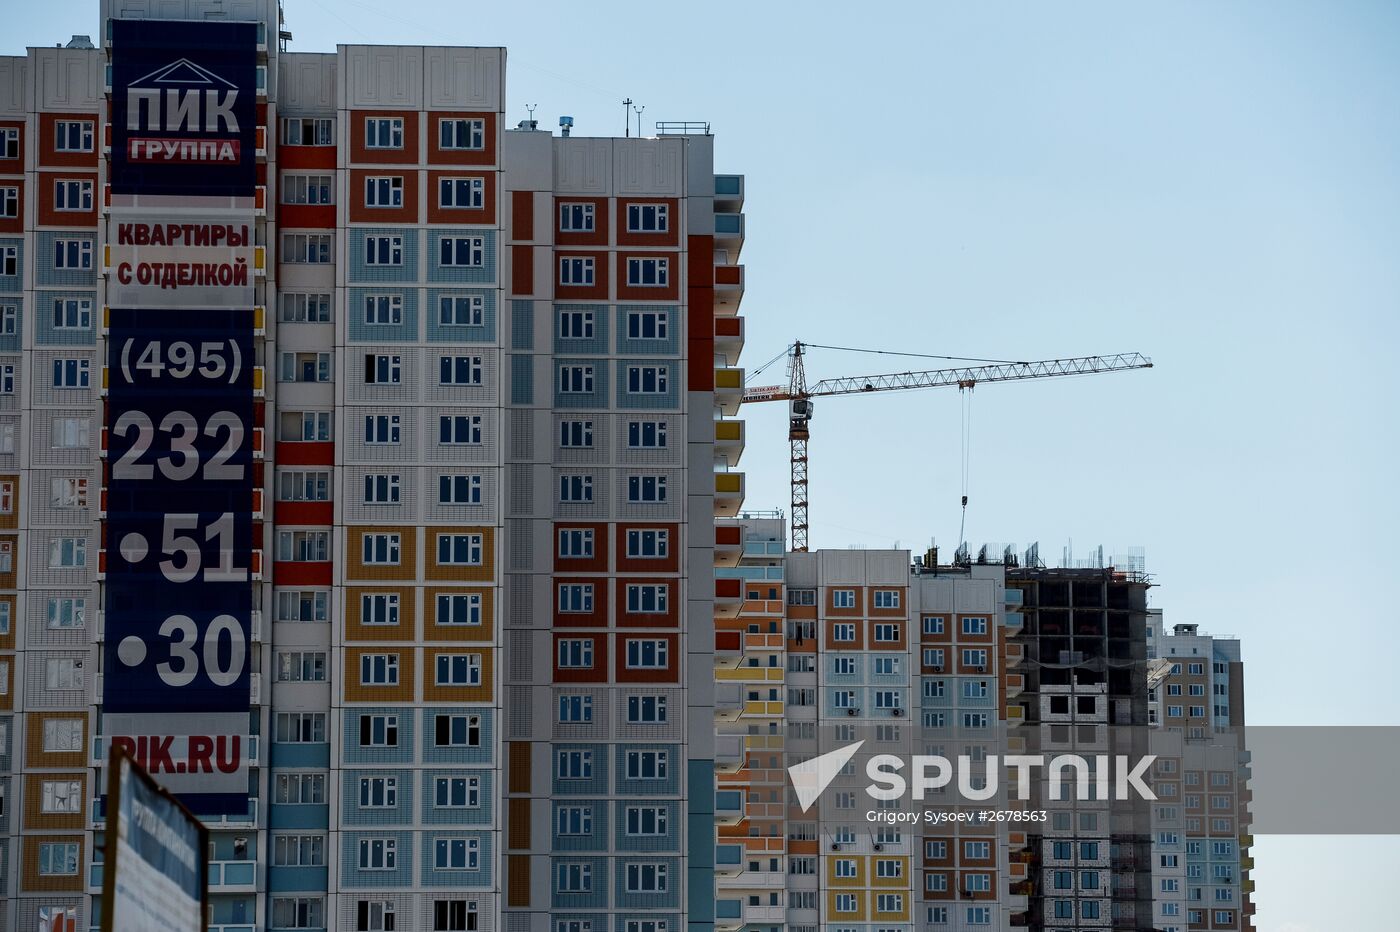 Construction conducted under Yaroslavsky residential development project in Mytishchi